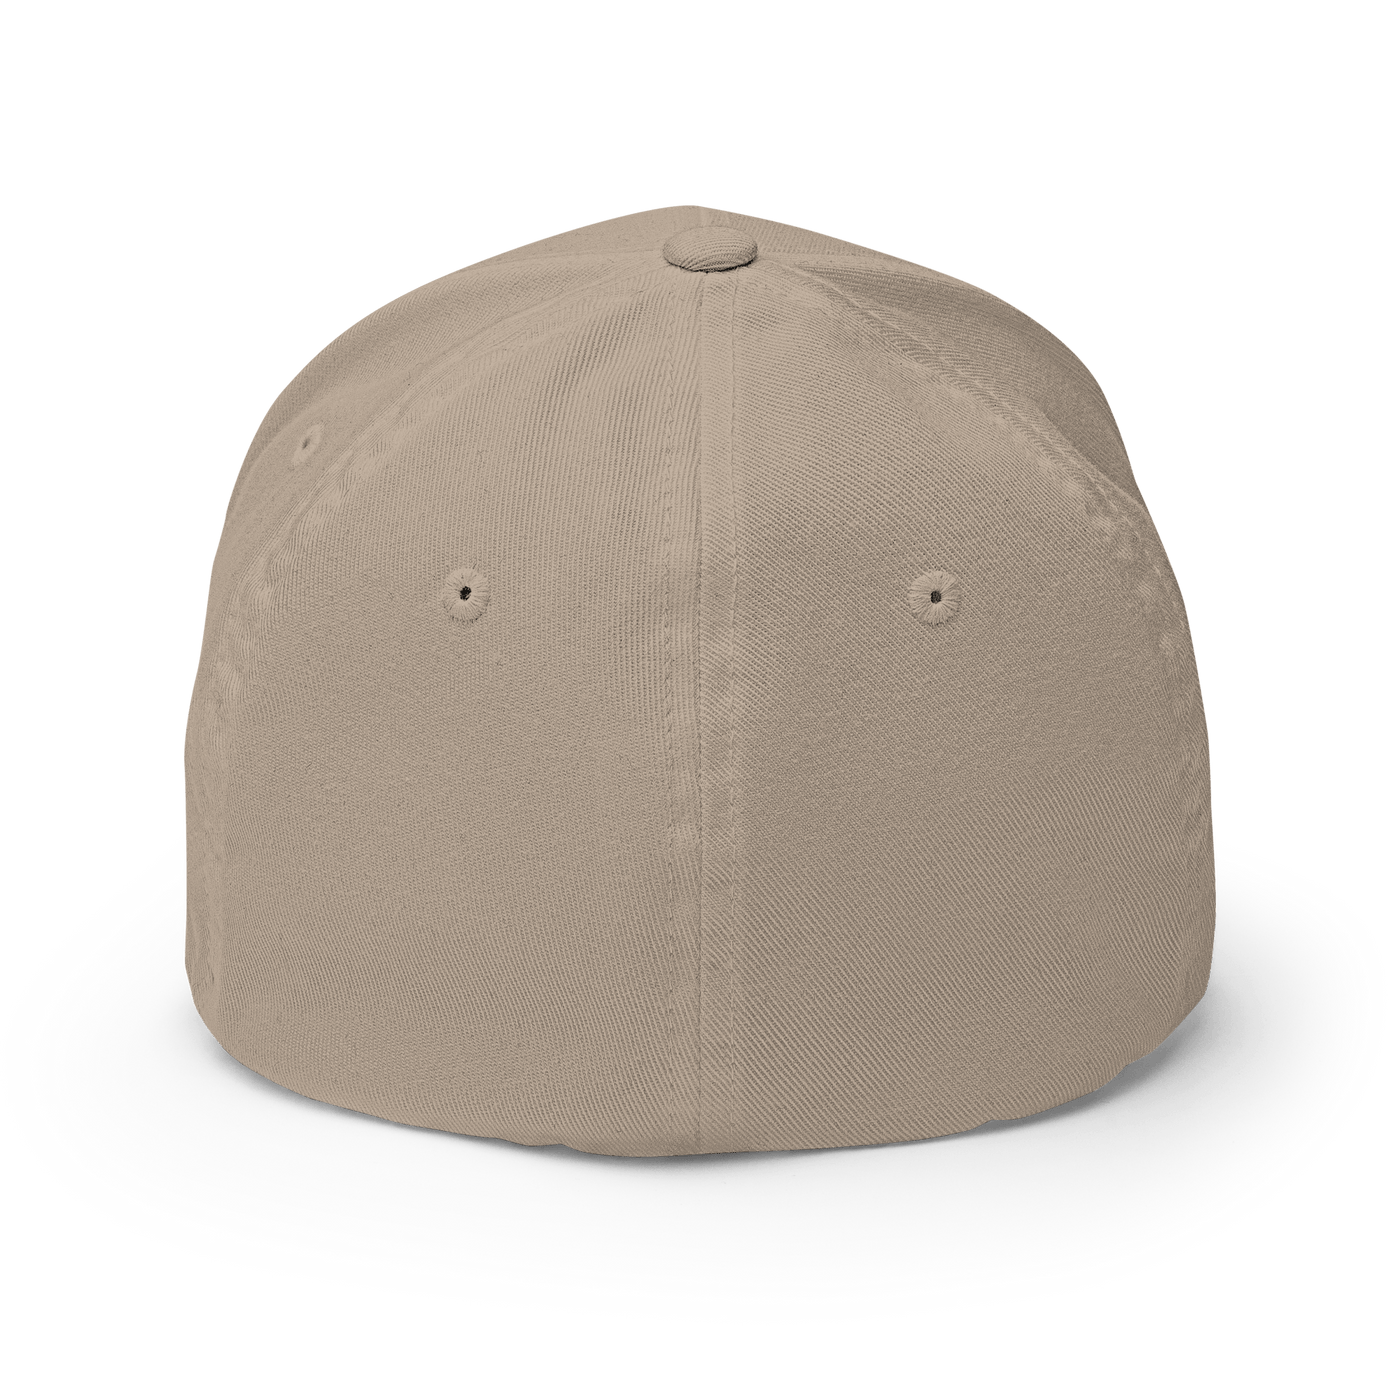 Future Milf Flexfit Cap - Khaki - S/M - Just Another Cap Store